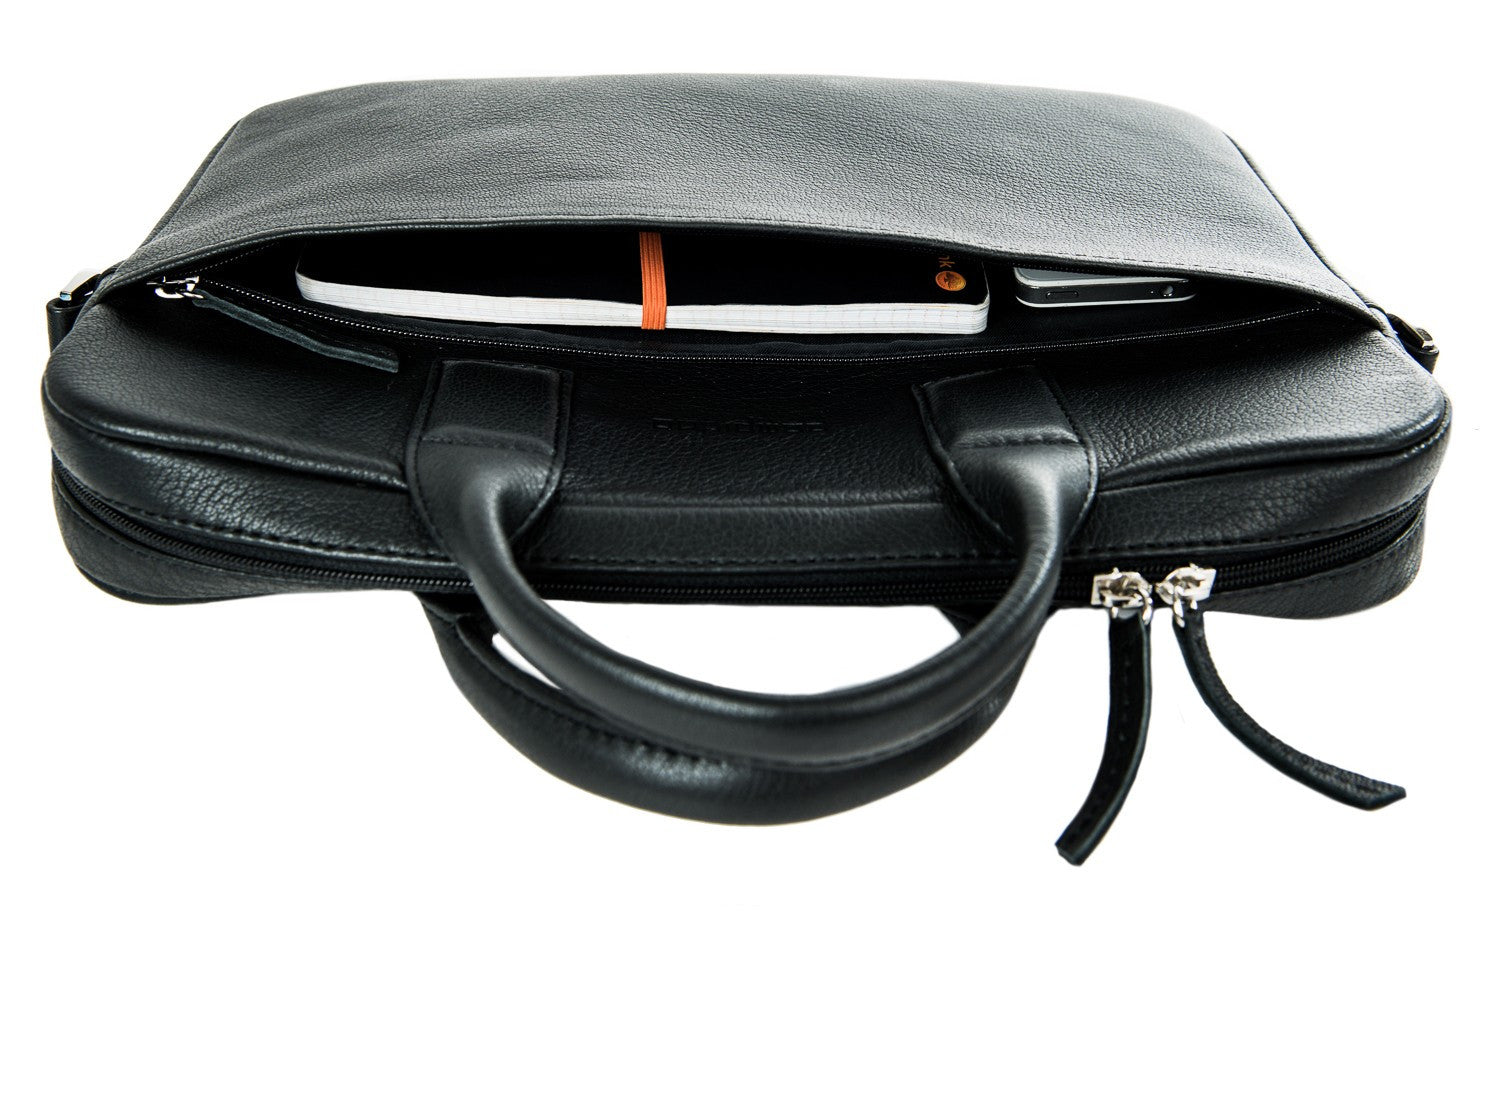 Black Leather Laptop Bag - Unisex by POMPIDOO | Jetset Times SHOP